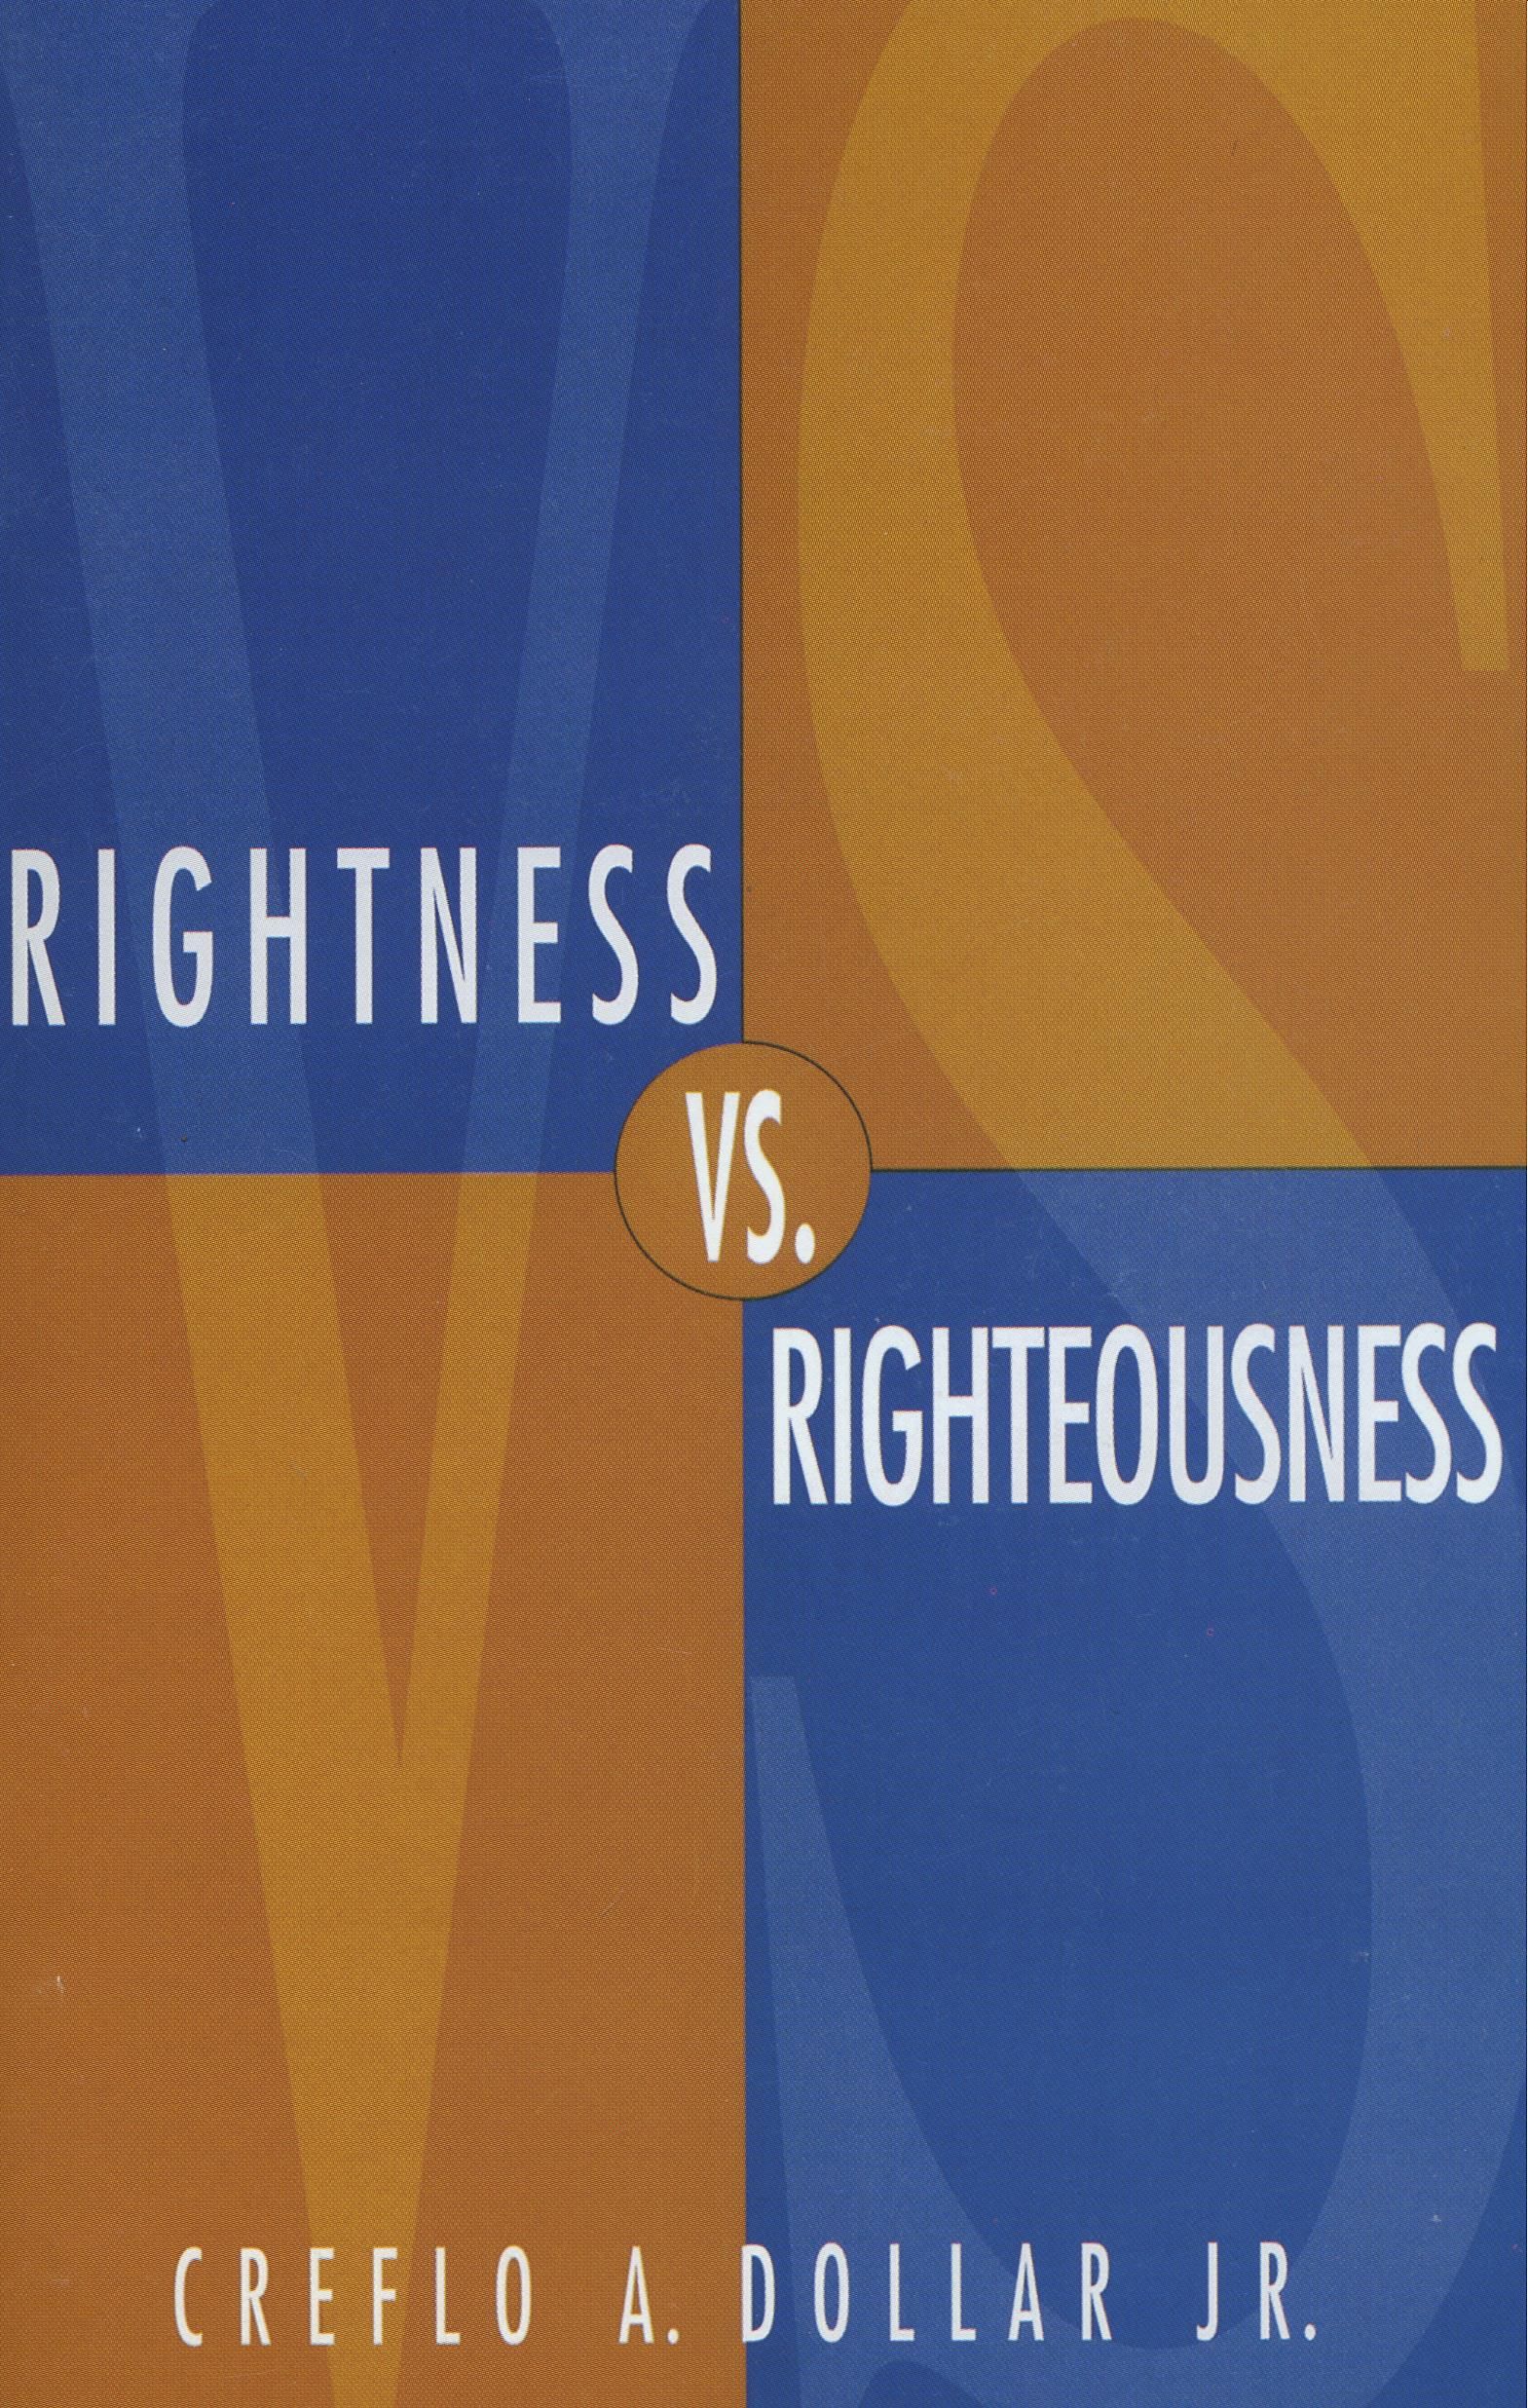 C. Dollar: Rightness Versus Righteousness